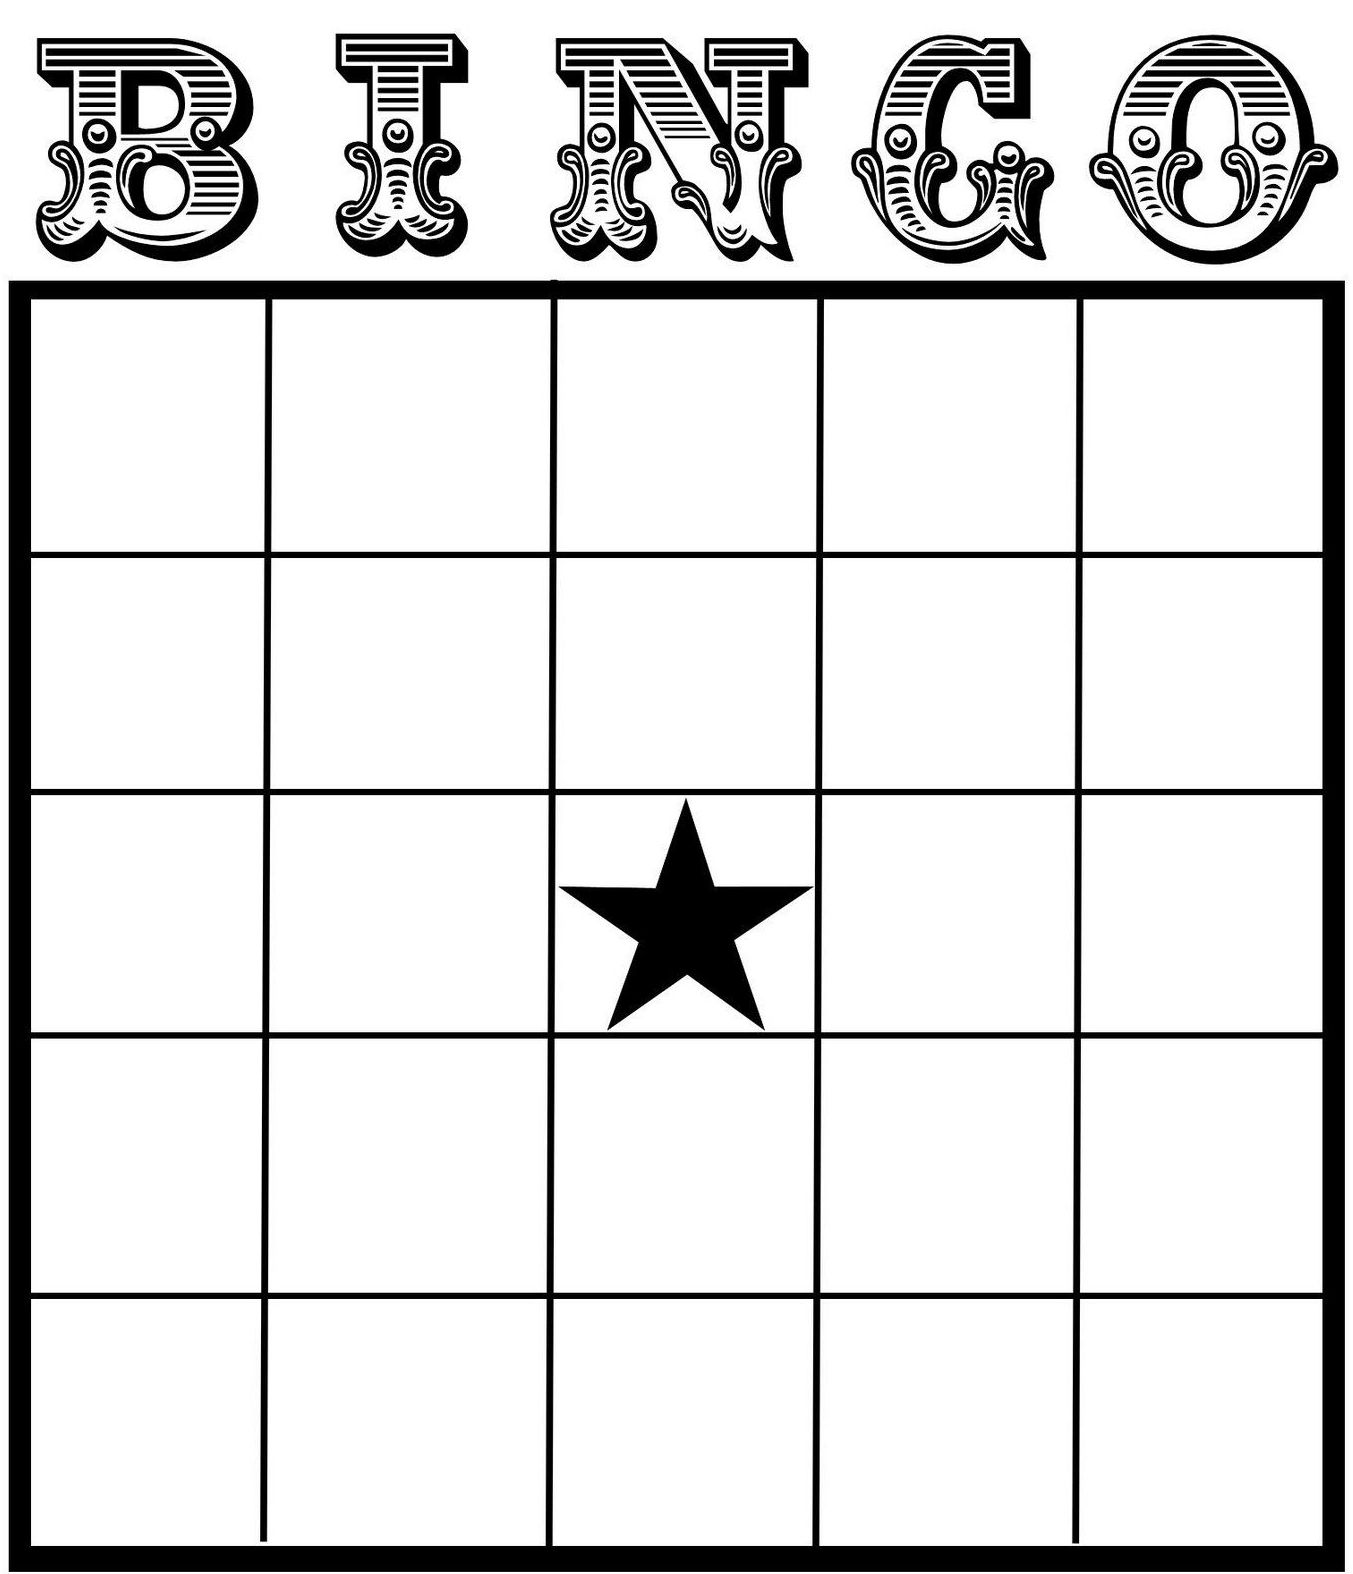 blank-bingo-forms-printable-printable-forms-free-online